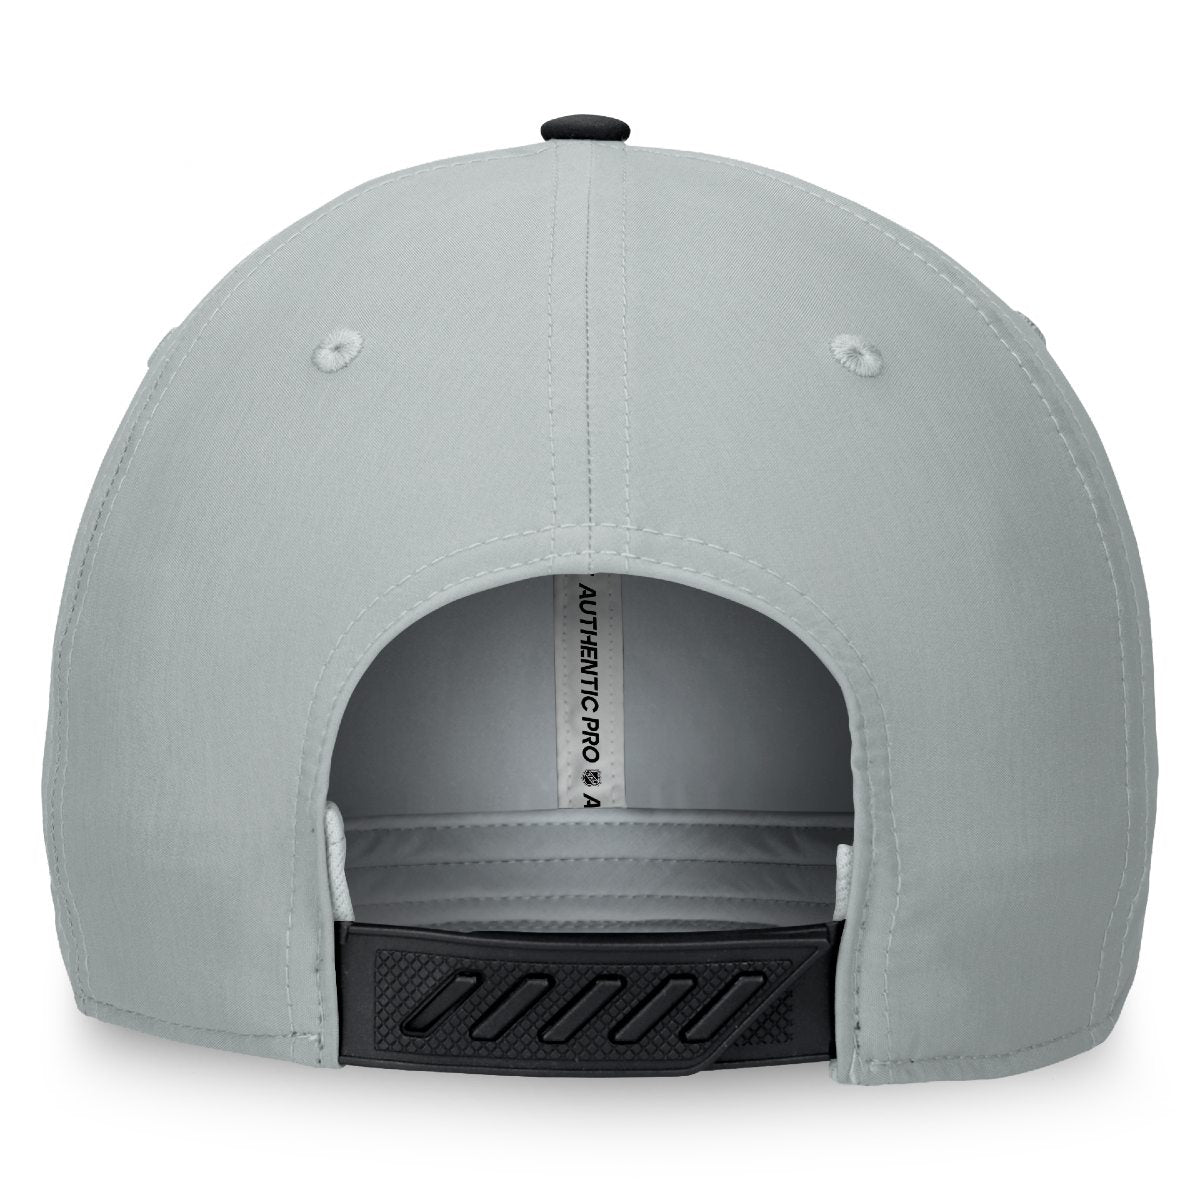 Tampa Bay Lightning Third Jersey Authentic Pro Locker Room Adjustable Hat